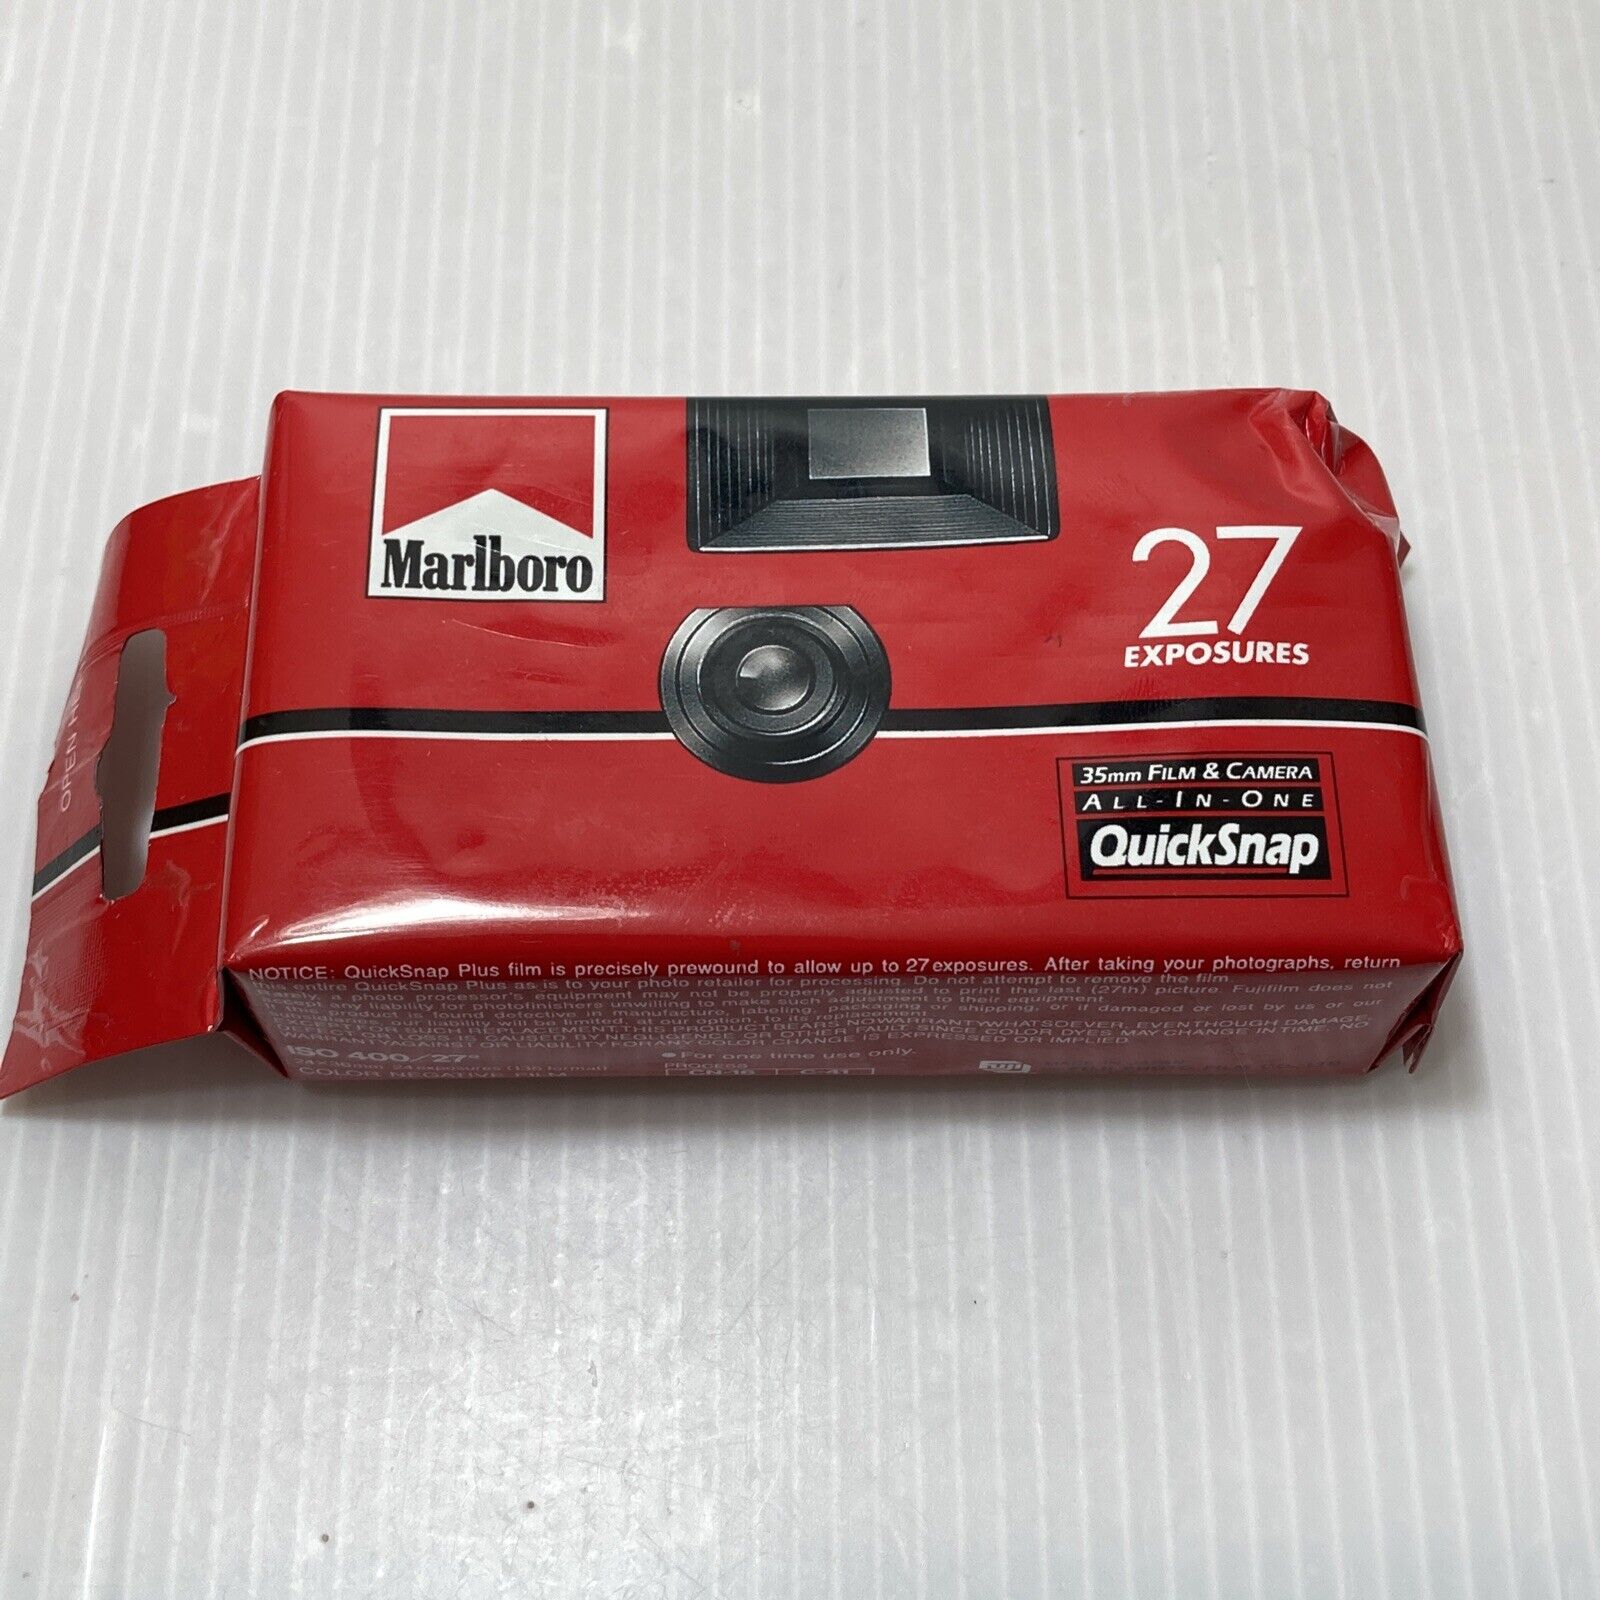 Vintage Marlboro 35mm Film Camera, 27 Exposures, QuickSnap, 06-97 Date Sealed